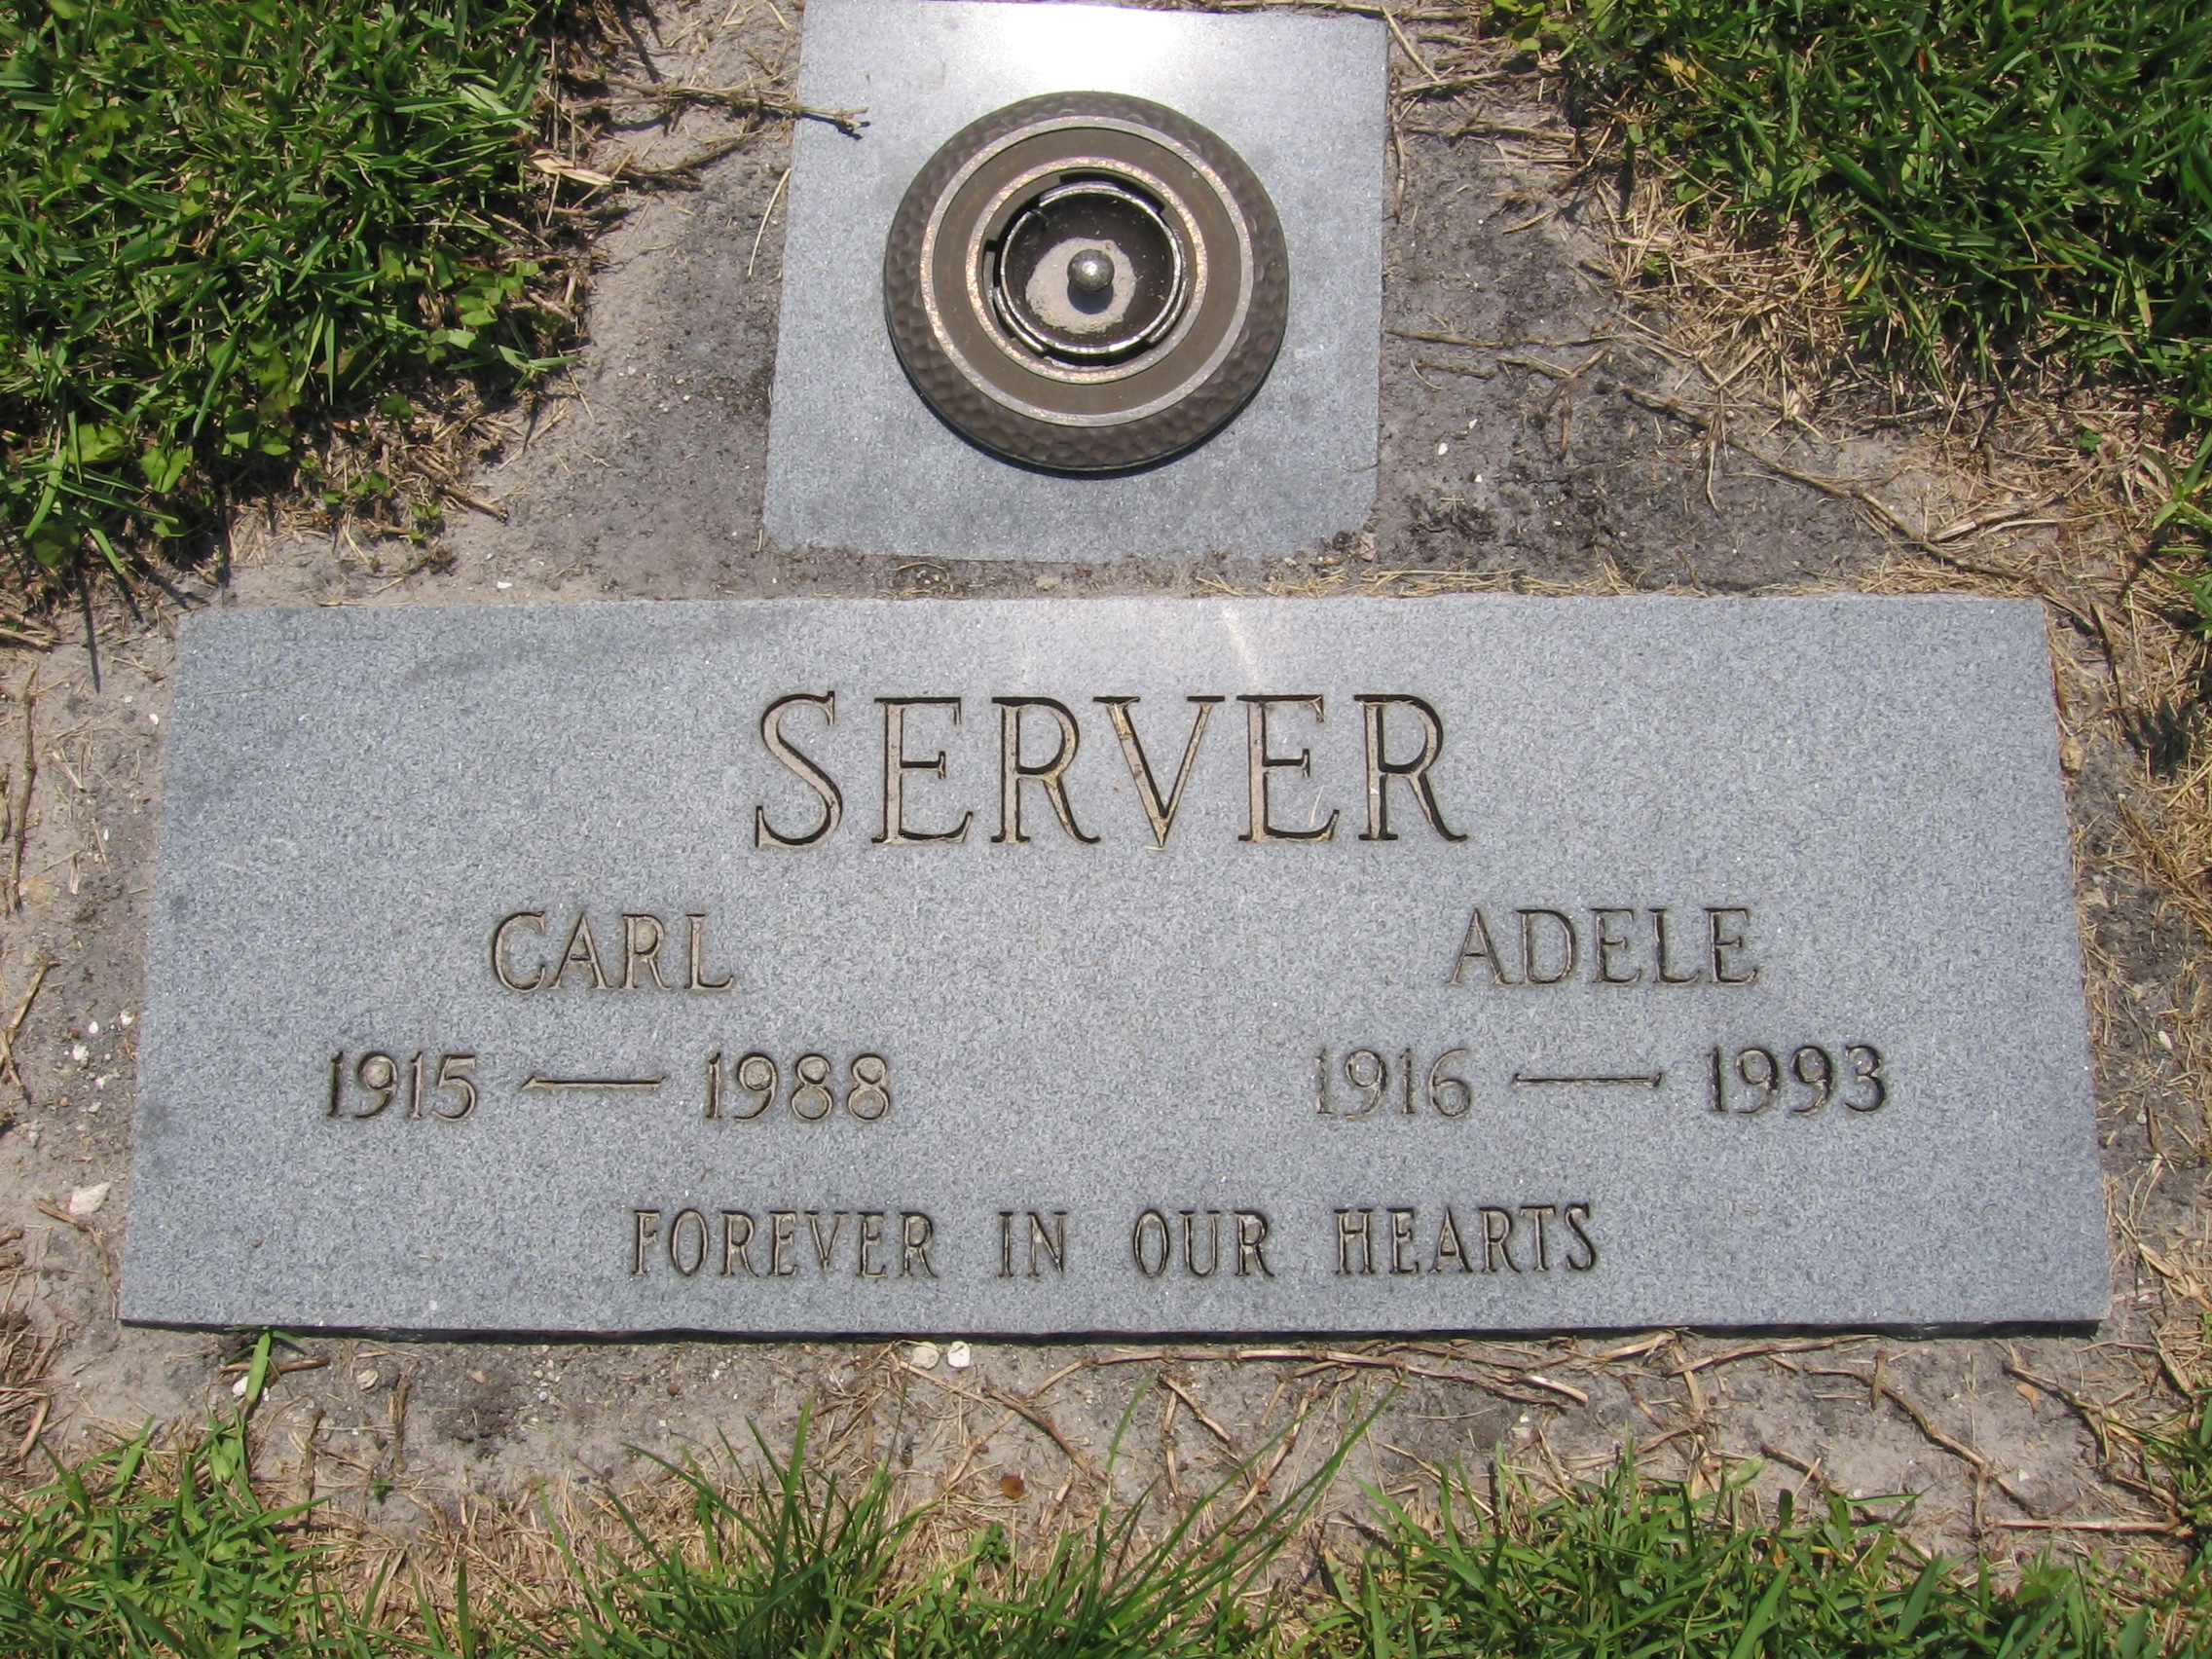 Carl Server